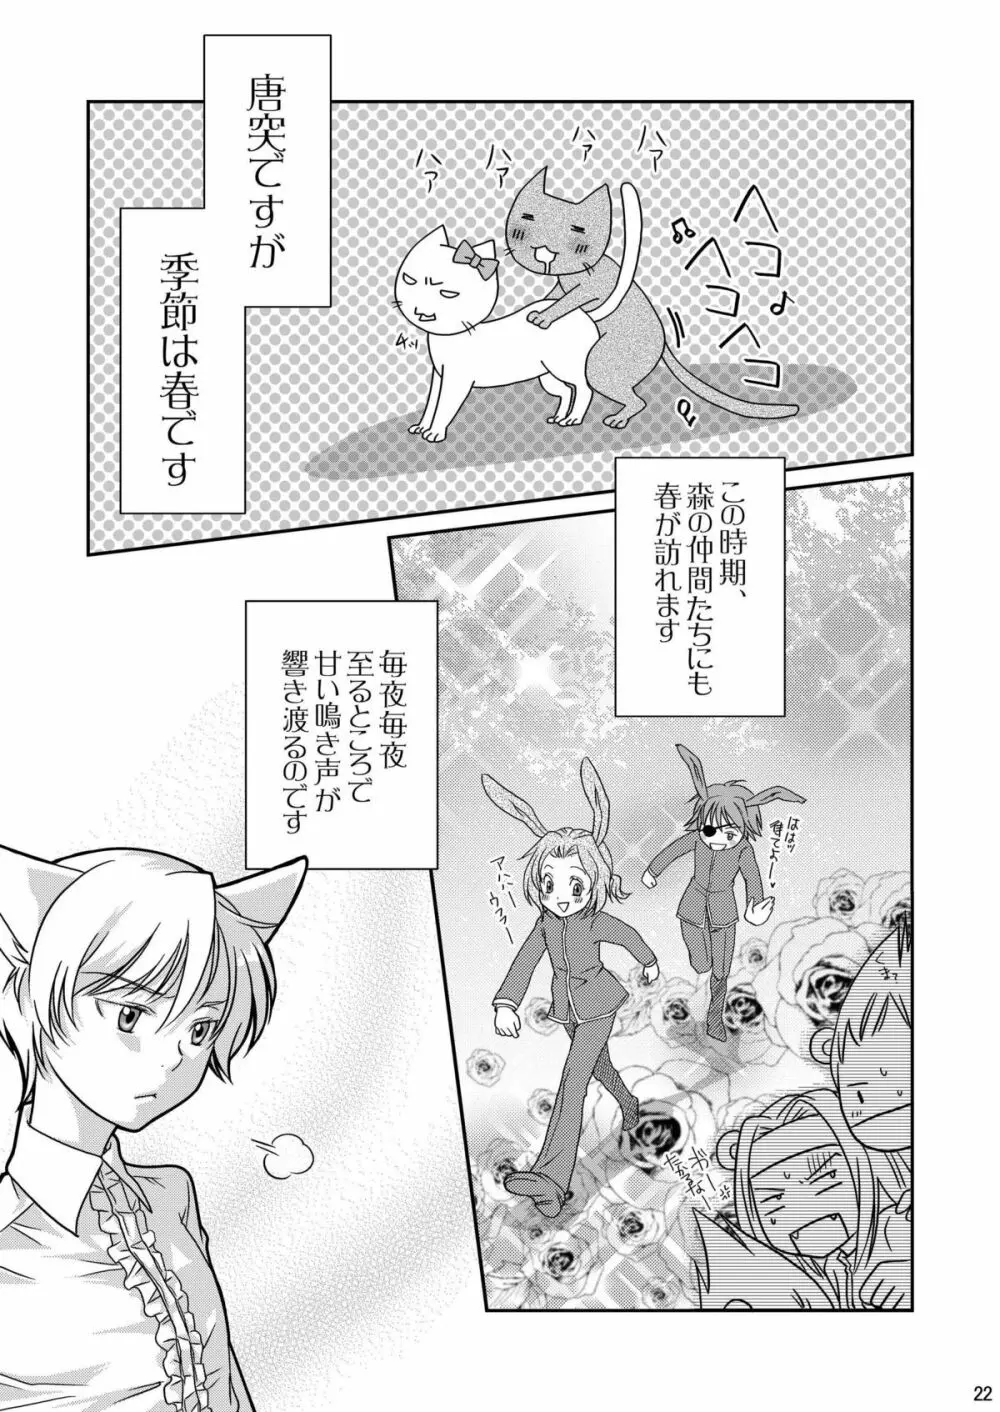 Re: ぷれい2 - page22